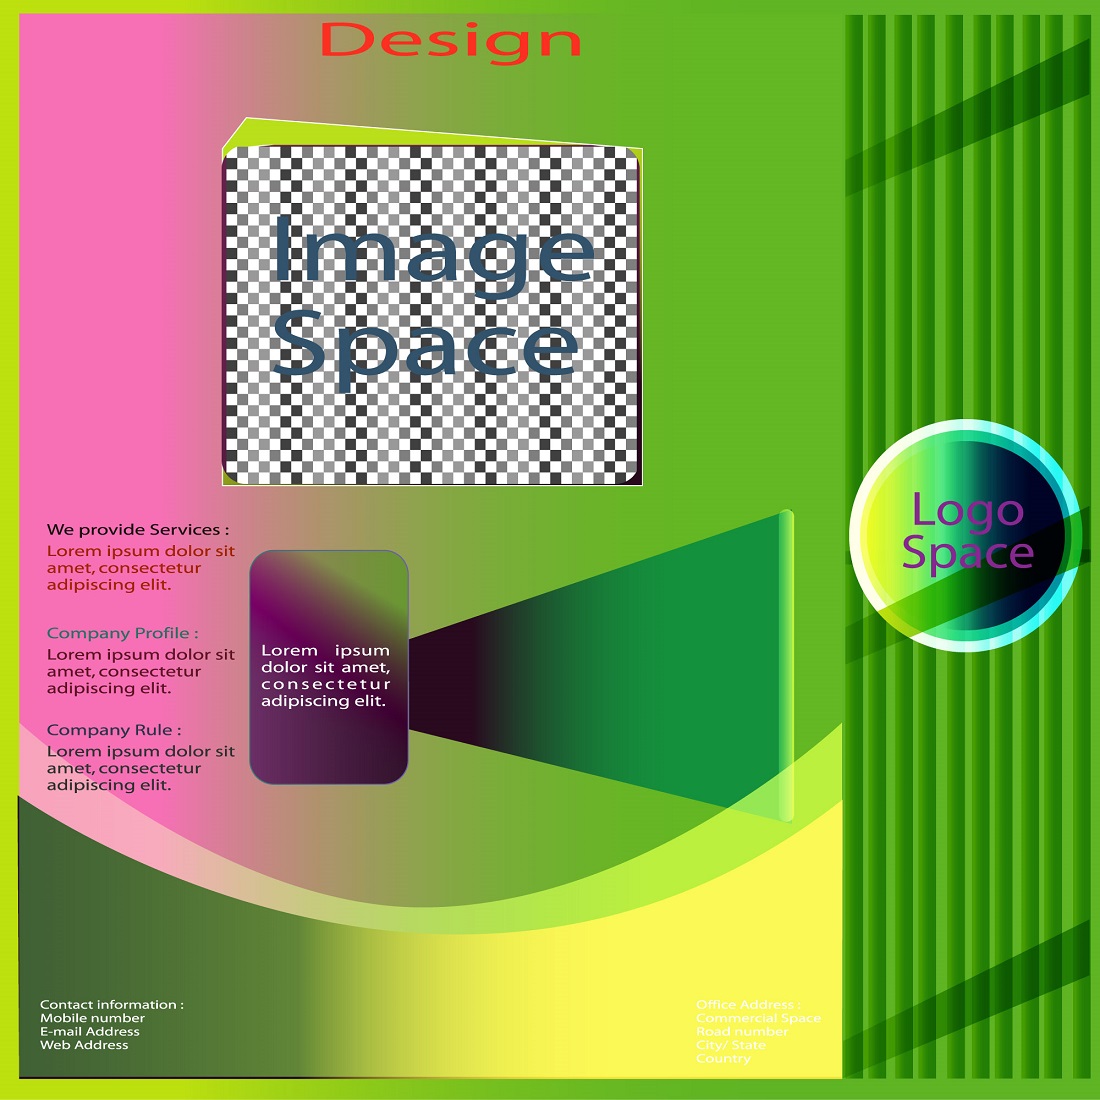 Gradient color vector graphics design bundle cover image.